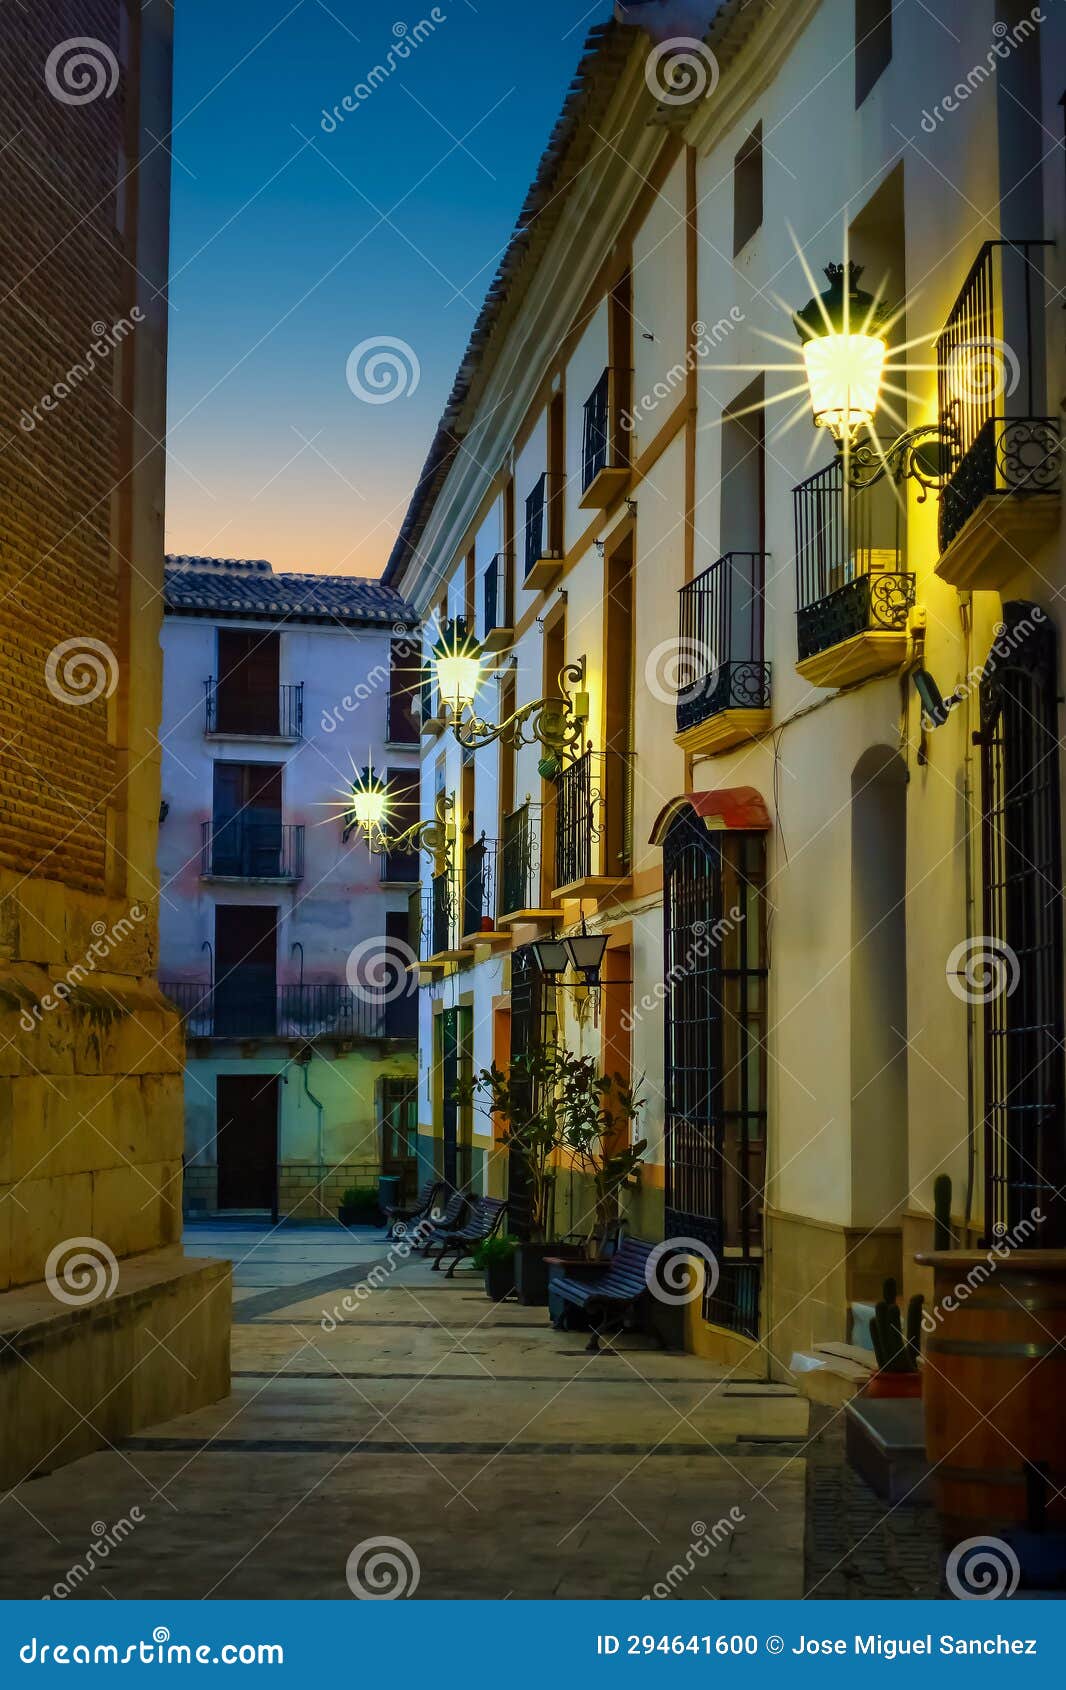 quaint narrow alley at dusk in the andalusian village of velez rubio, almeria, spain.